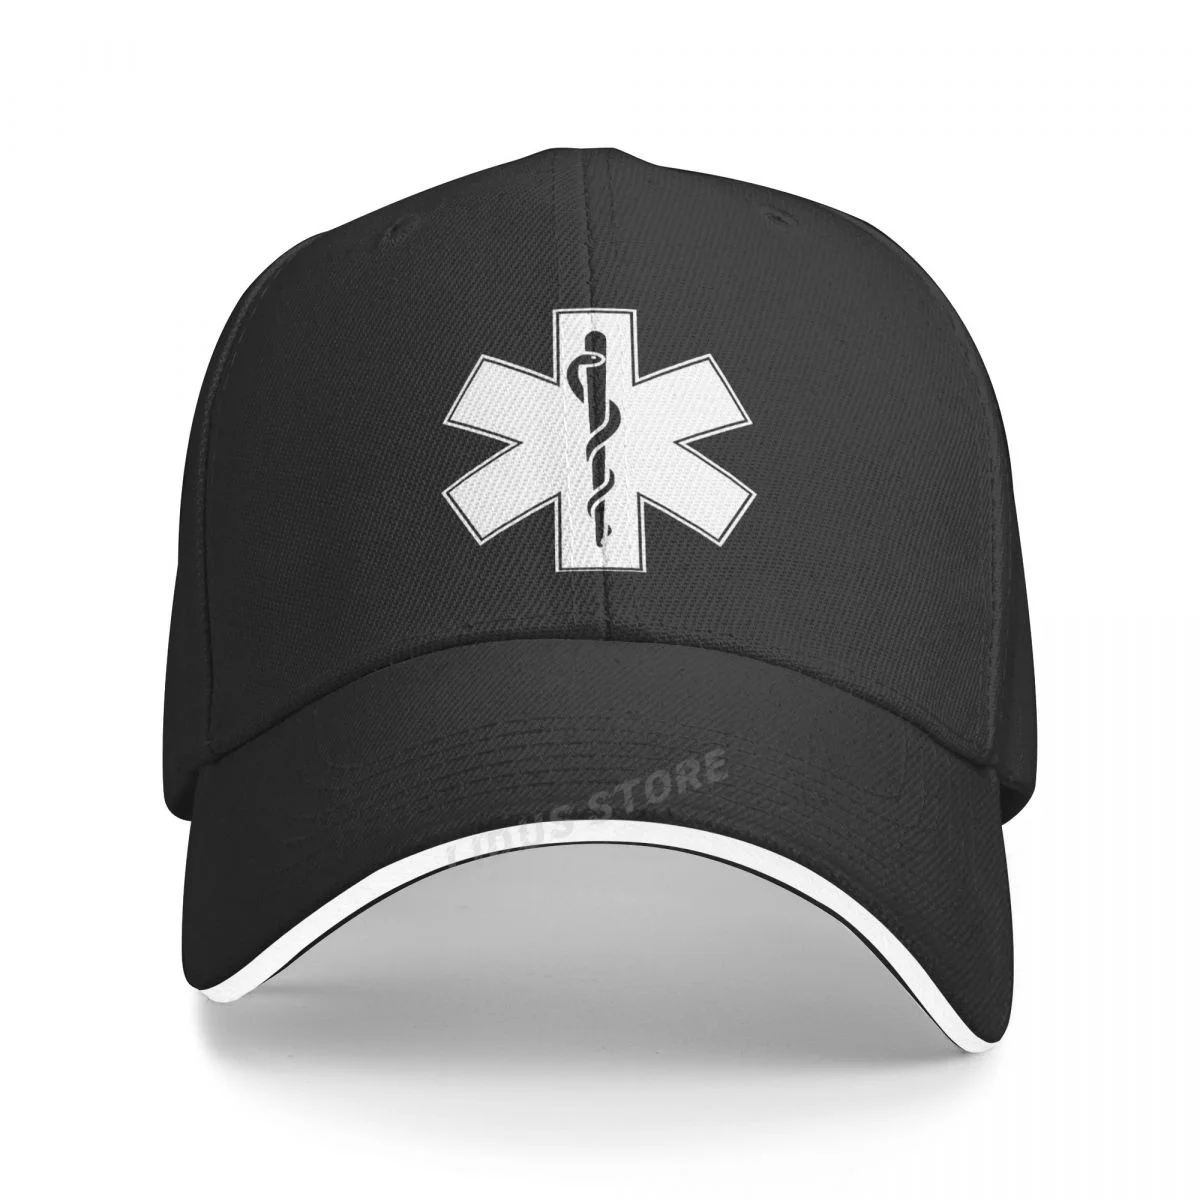 EMT Paramedic Emergency Medical Services Baseball Caps Adjustable Fashion Unisex Hat Summer Outdoor Caps